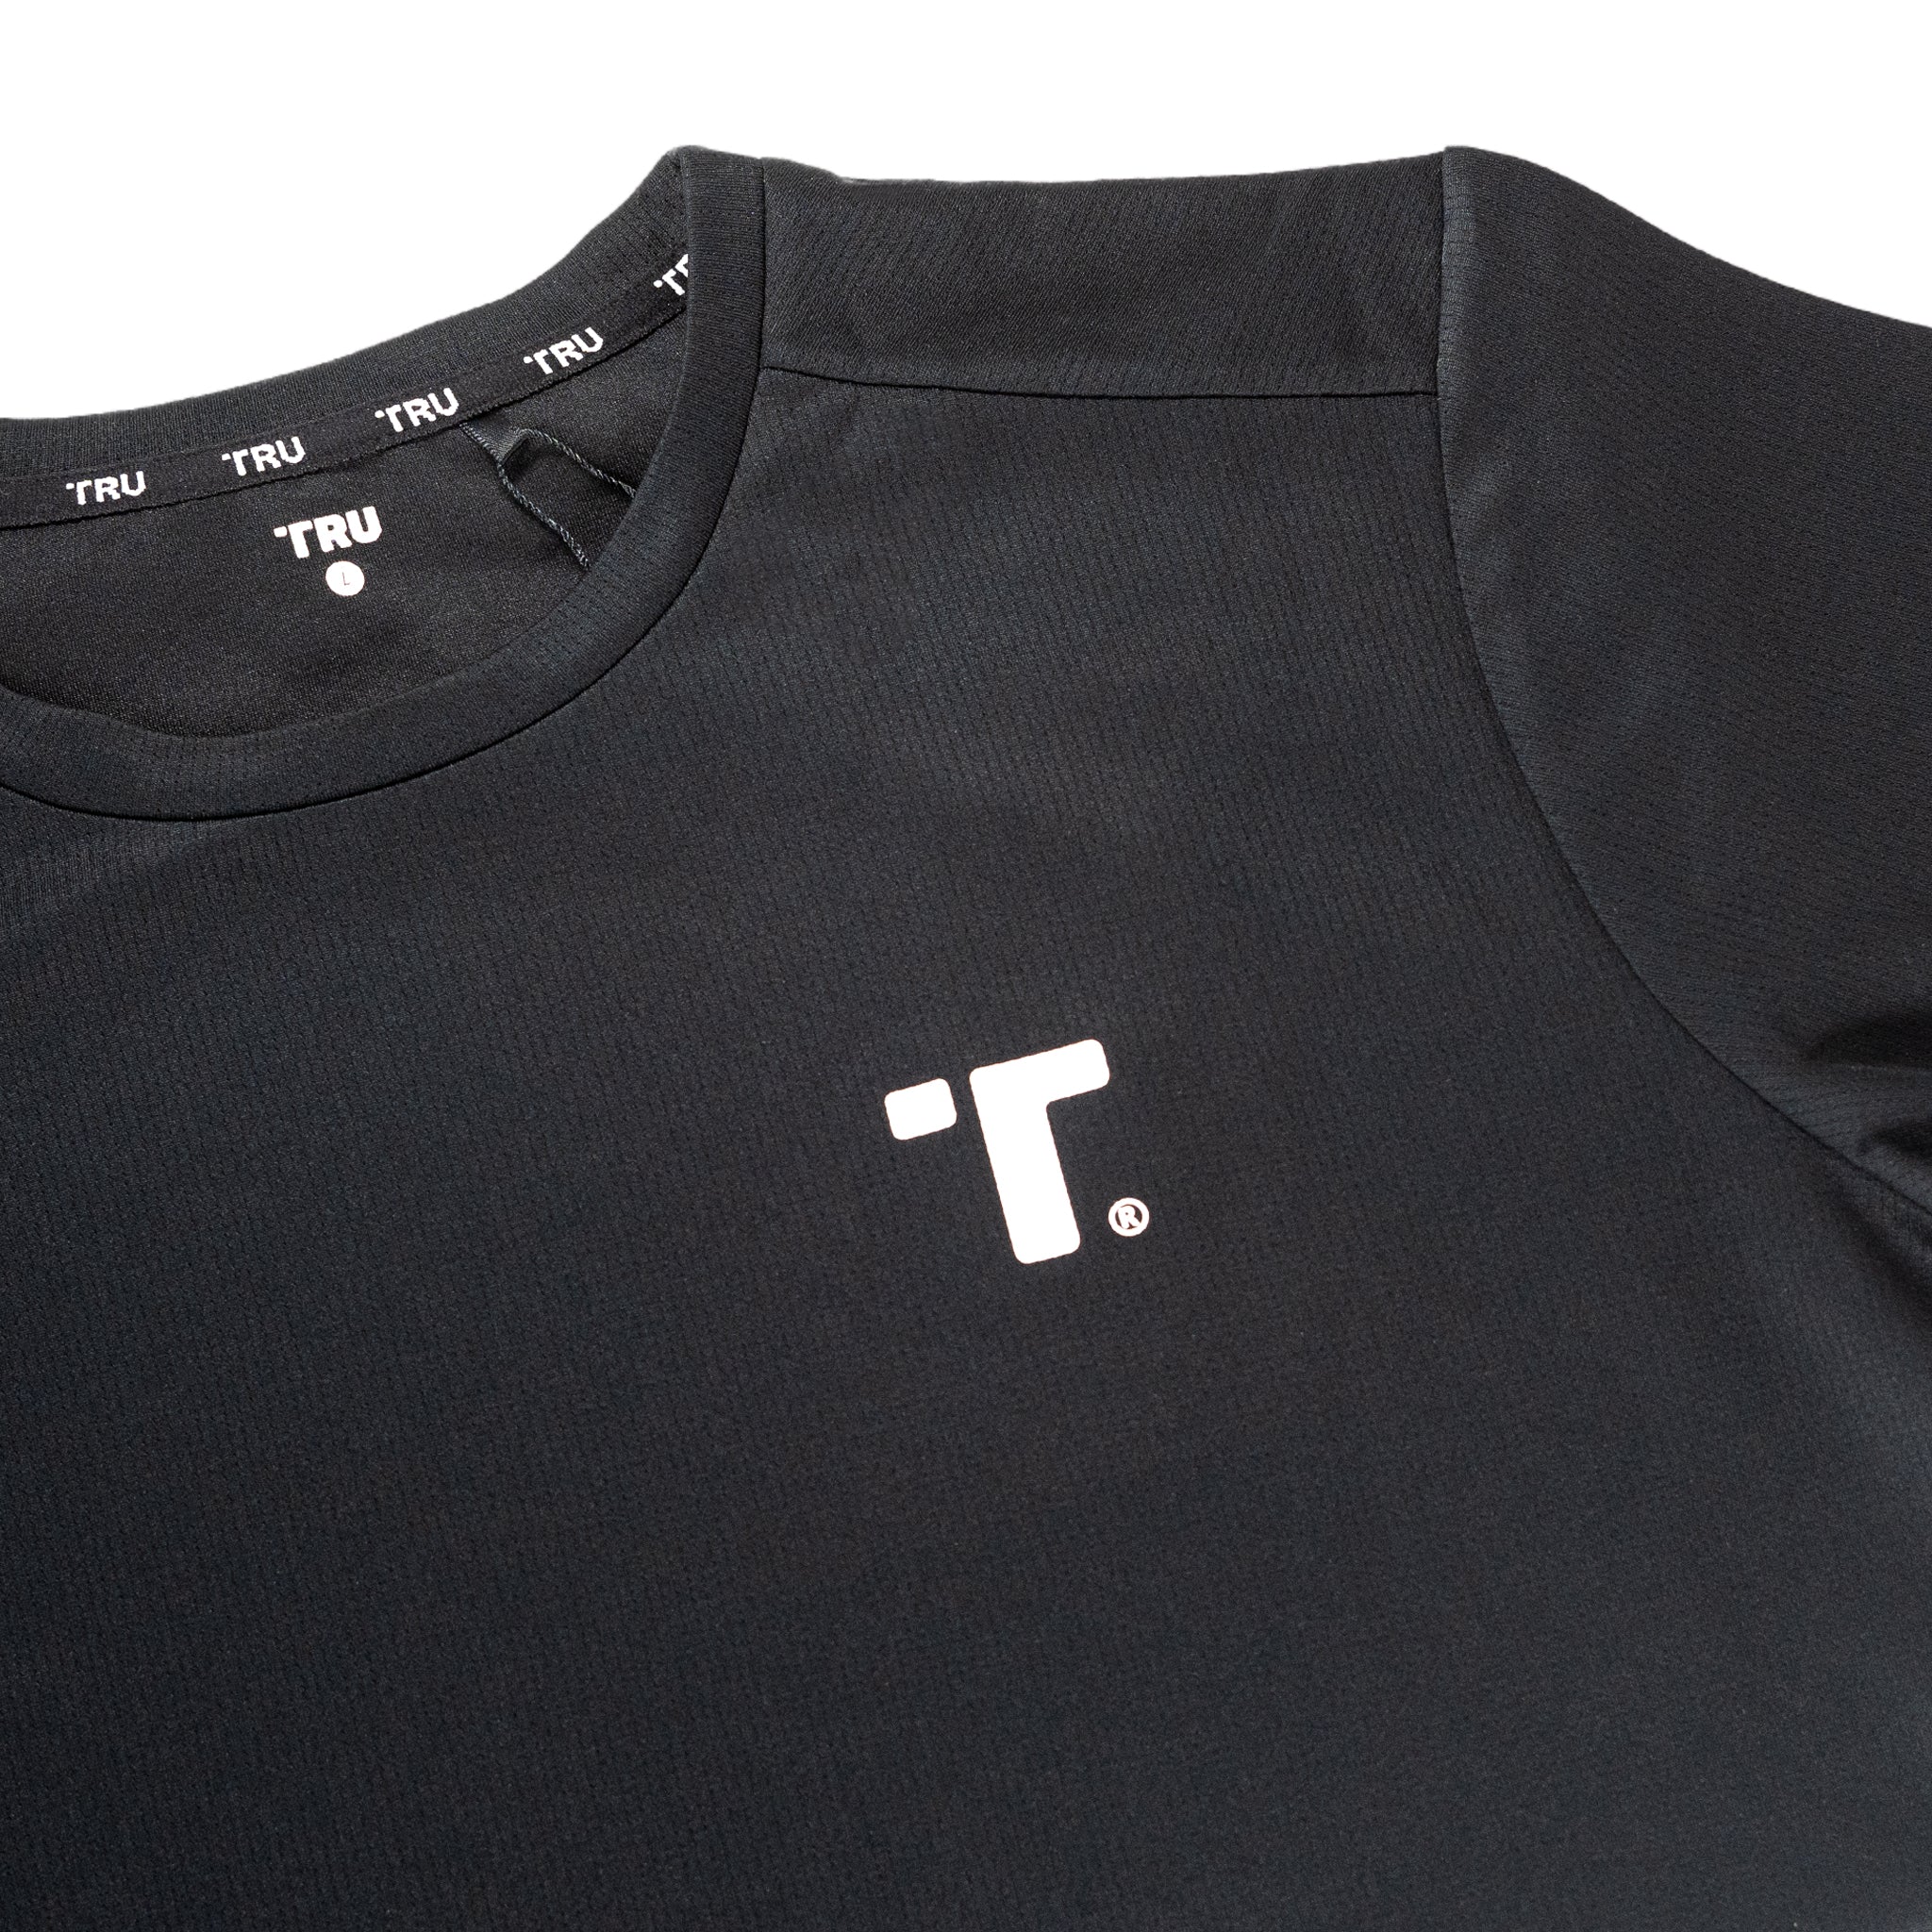 TRU 559 - Crew T-Shirt